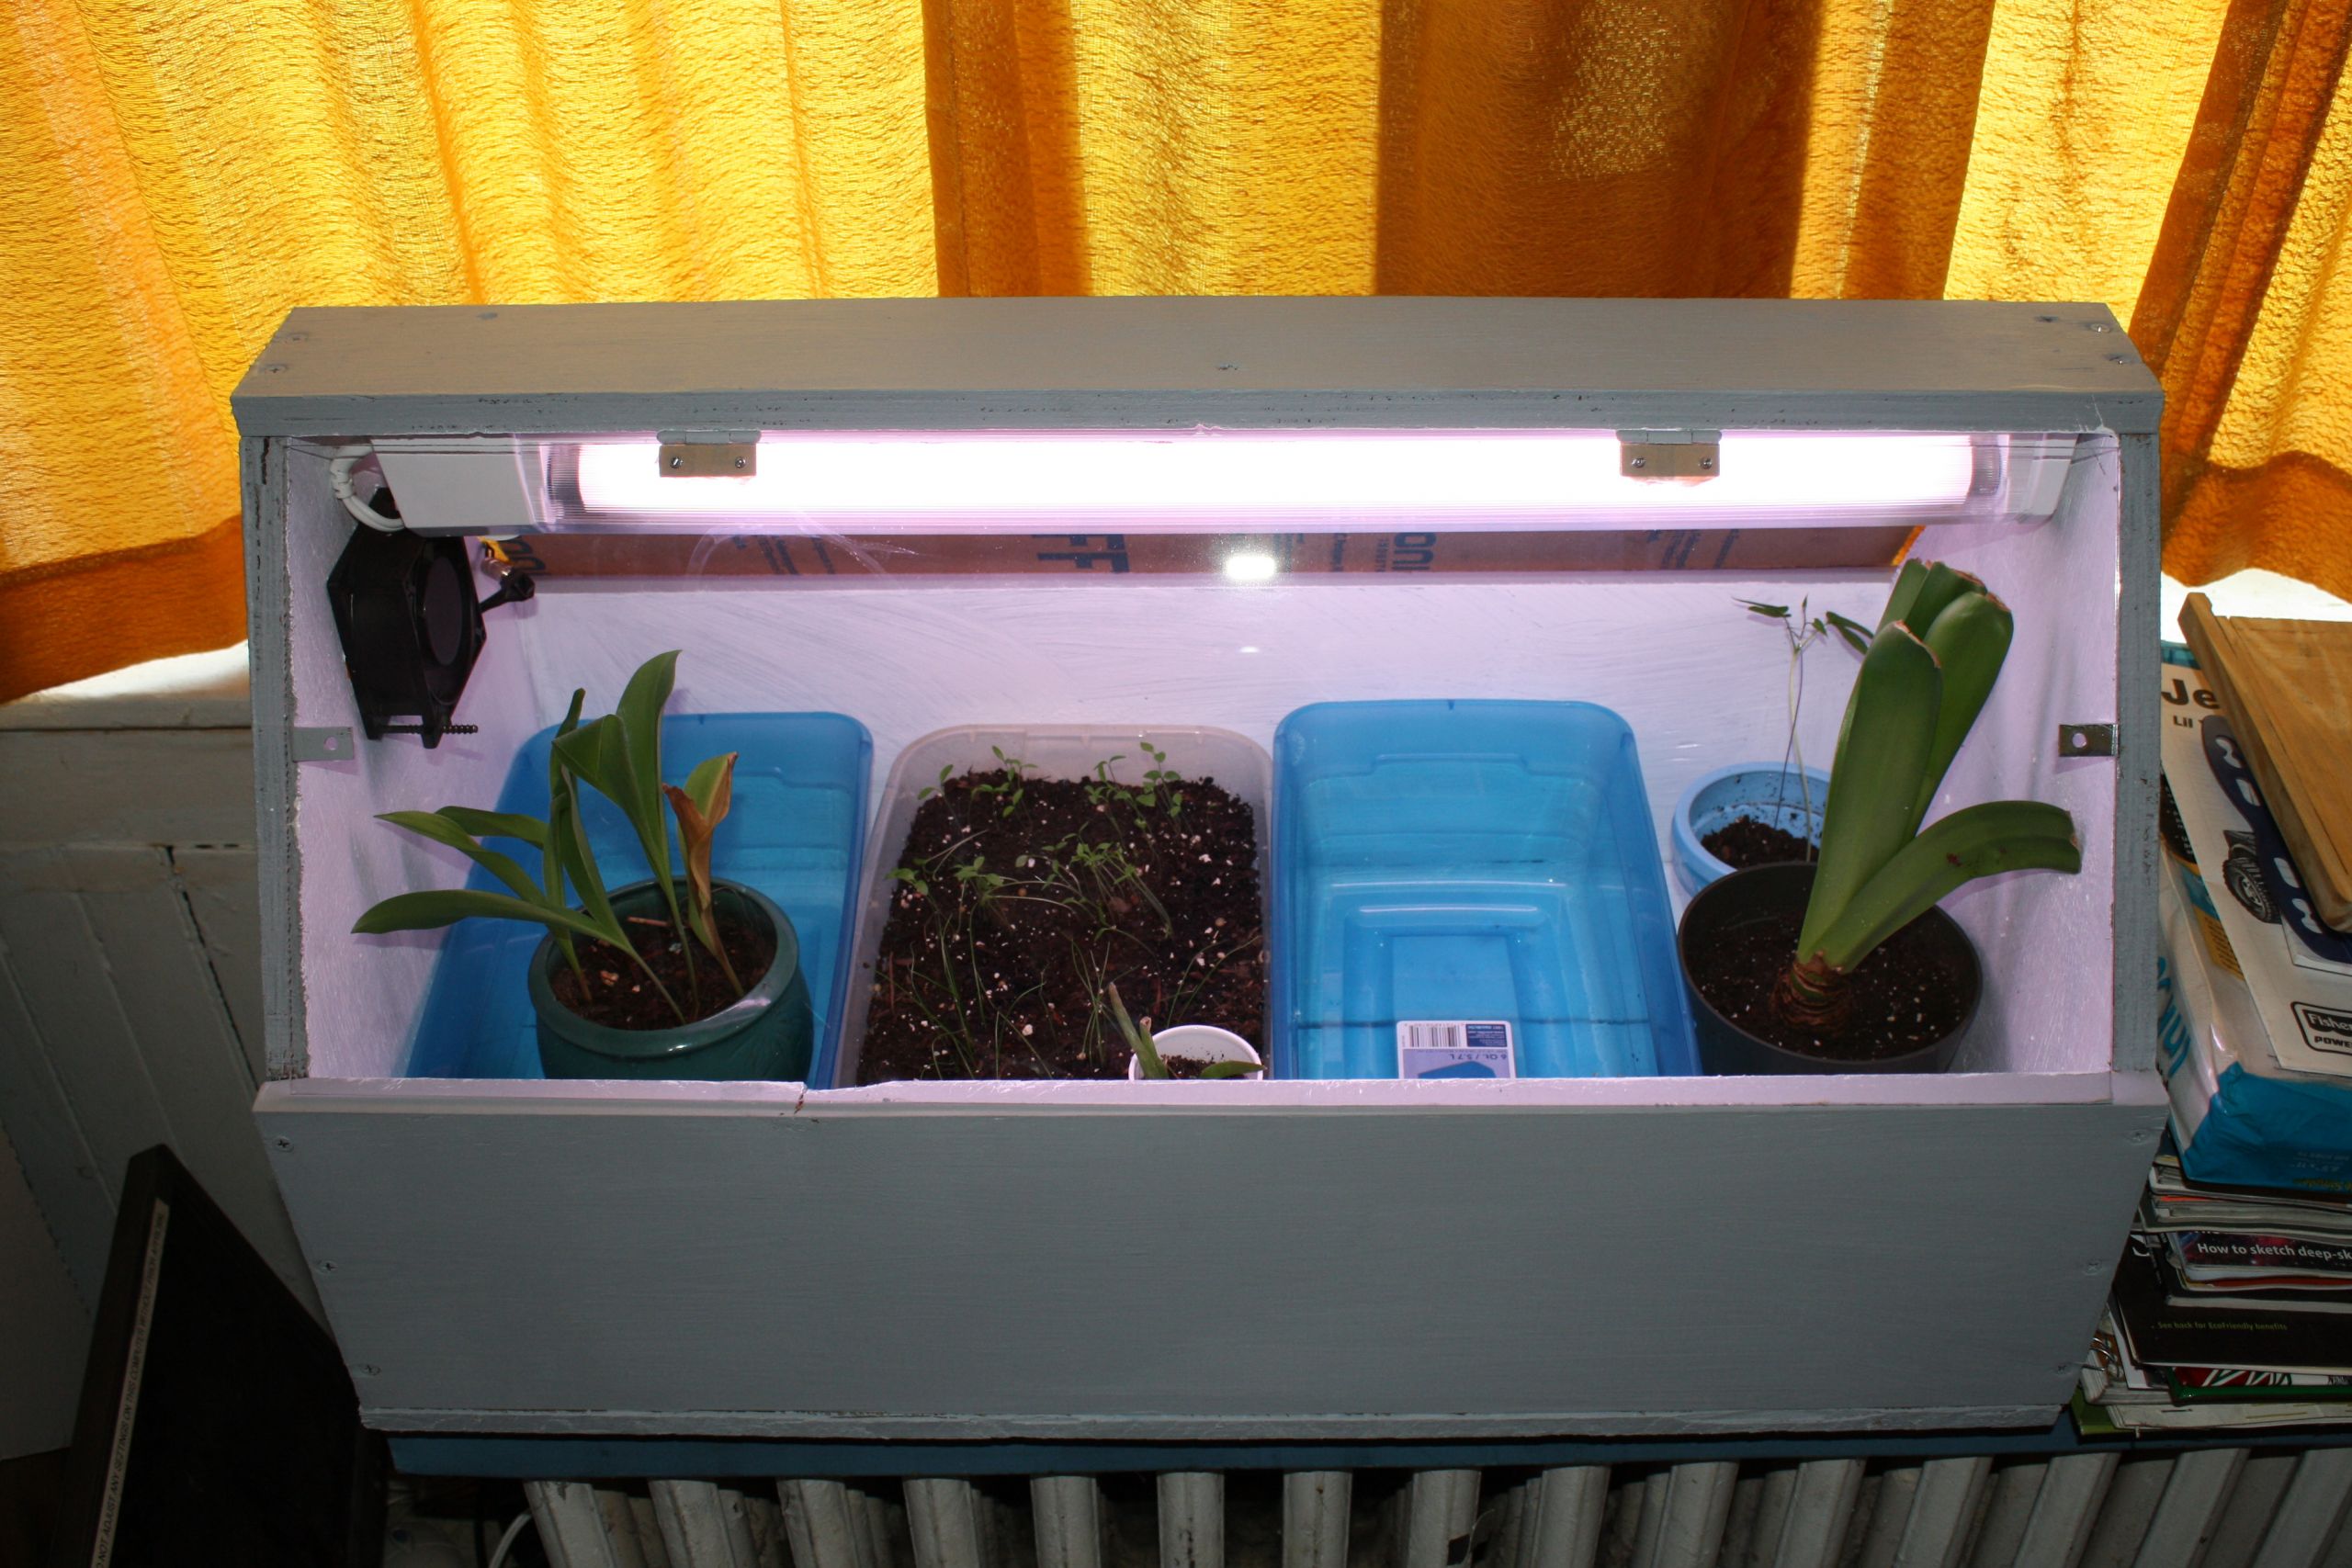 DIY Indoor Grow Box
 12 DIY Homemade Grow Boxes to Control the Growing Environment